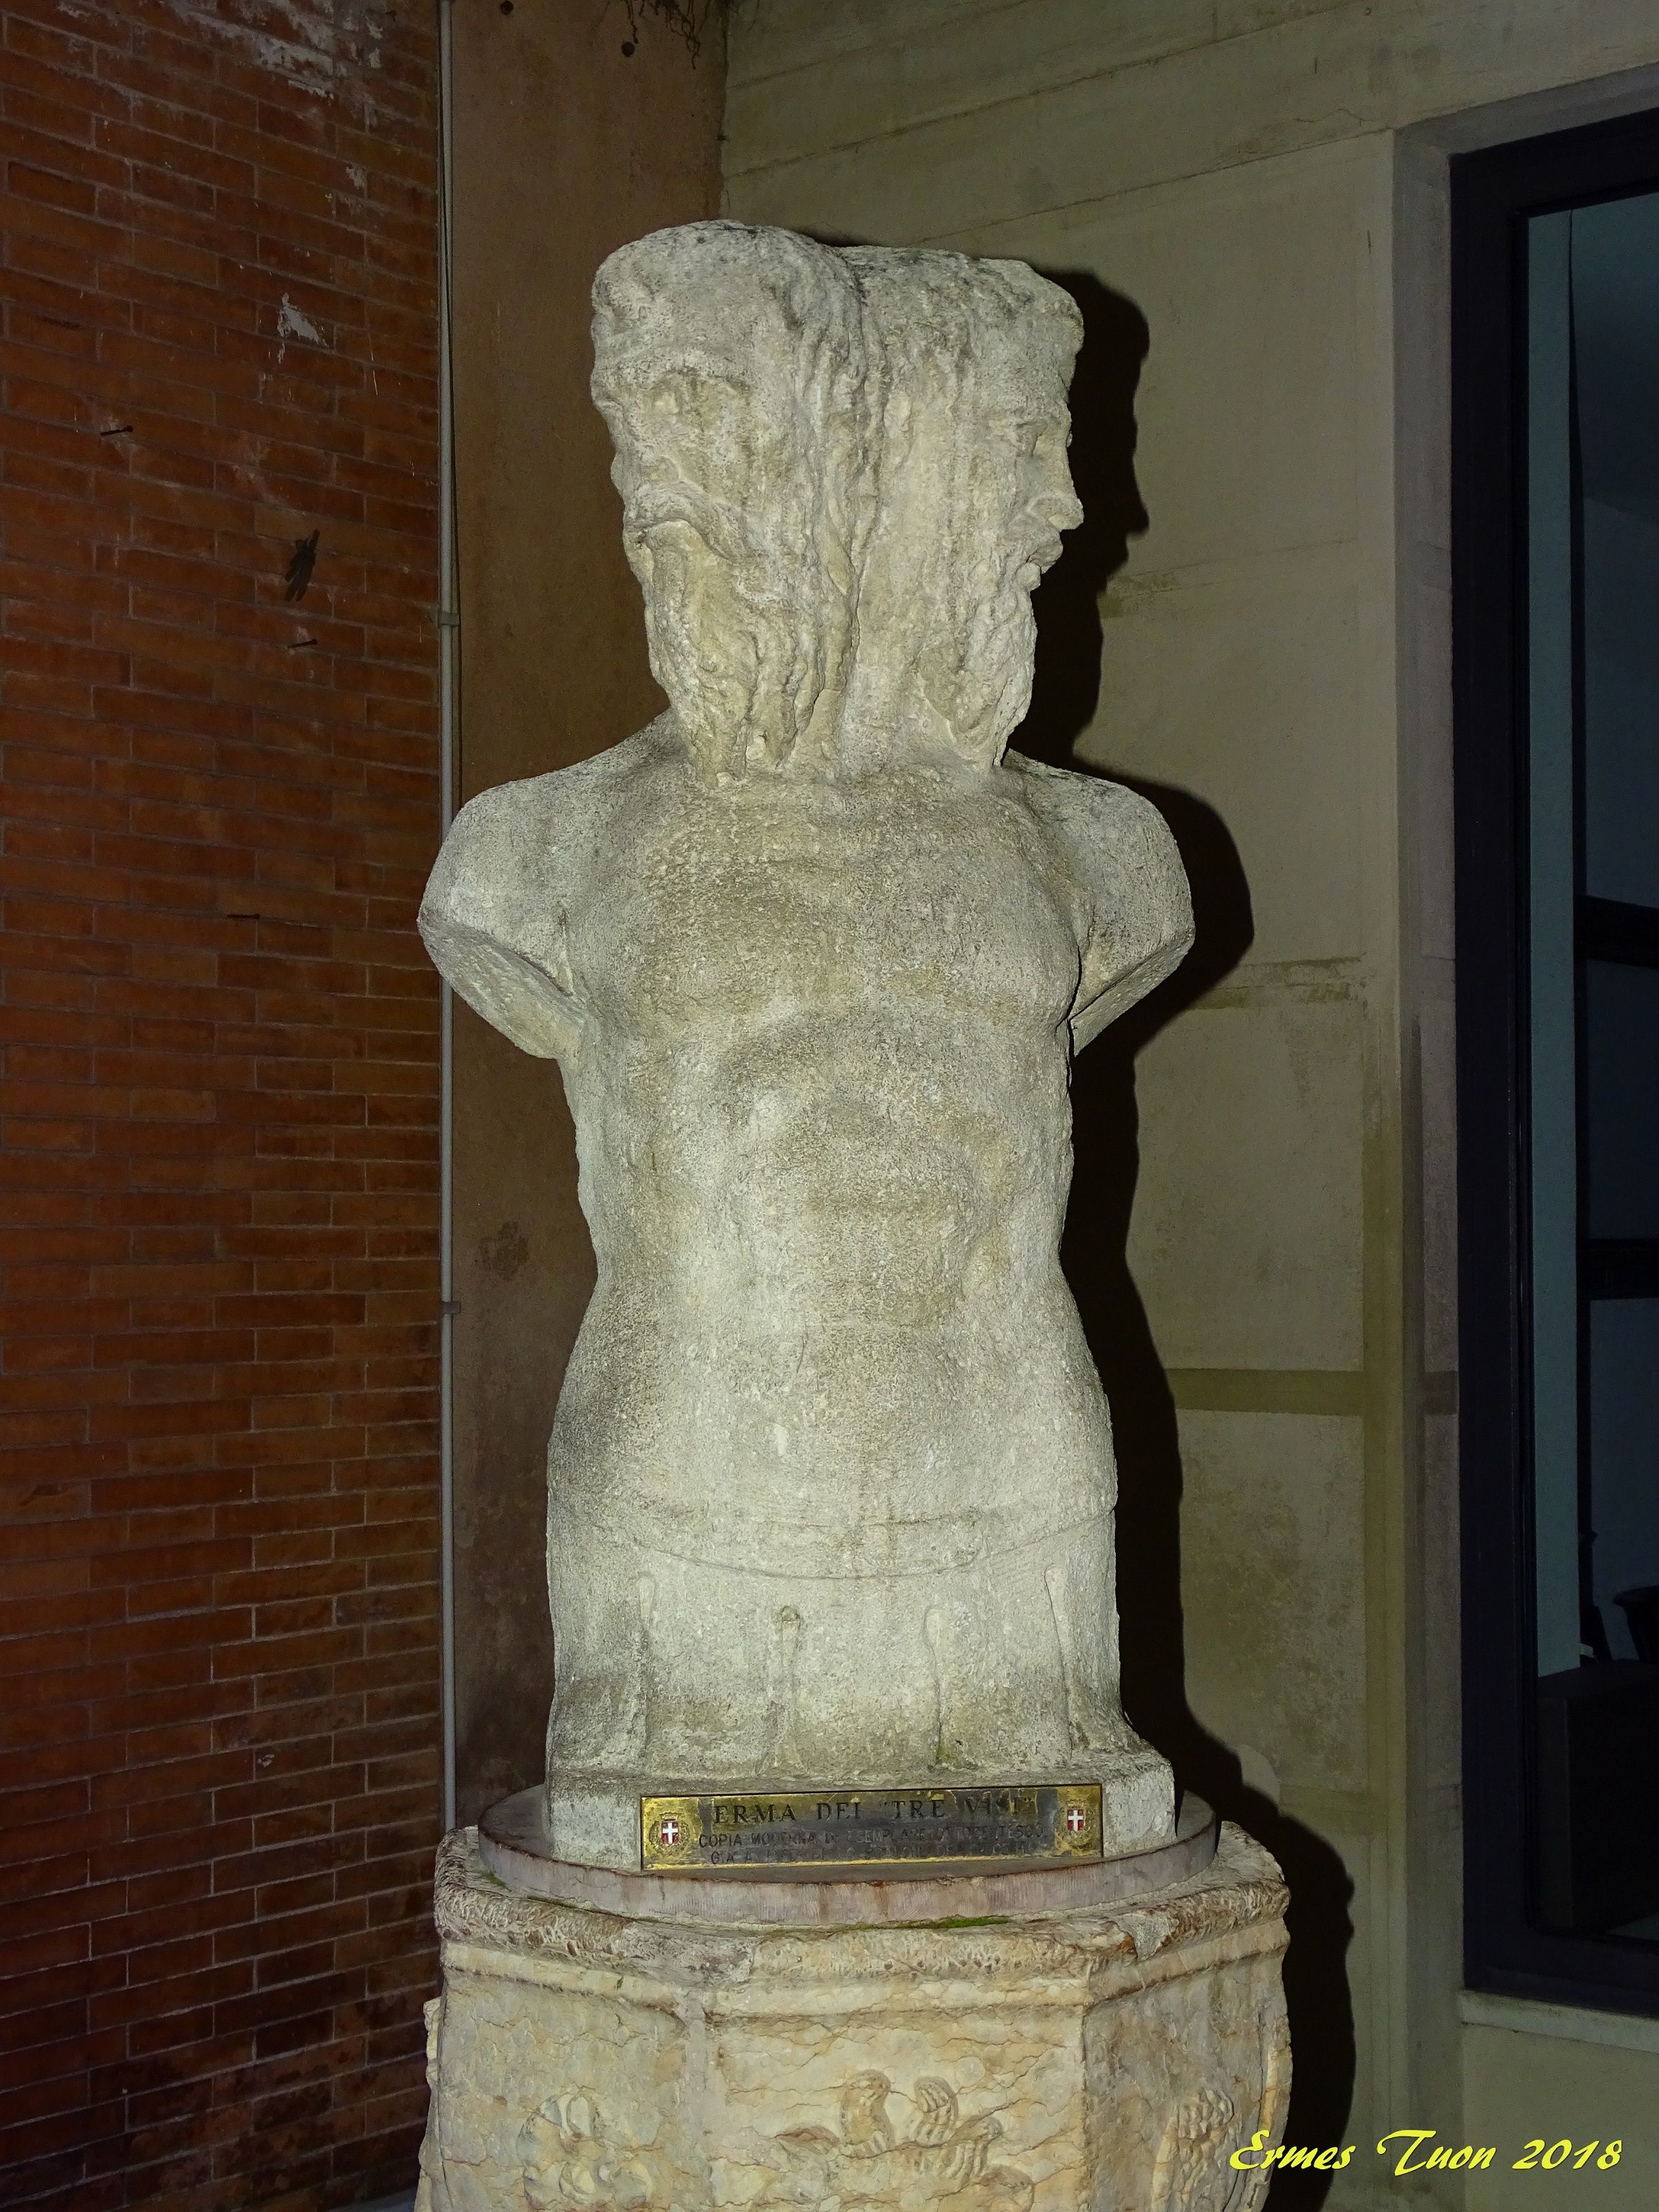 Caption - Fontana dei Tre Visi - Treviso